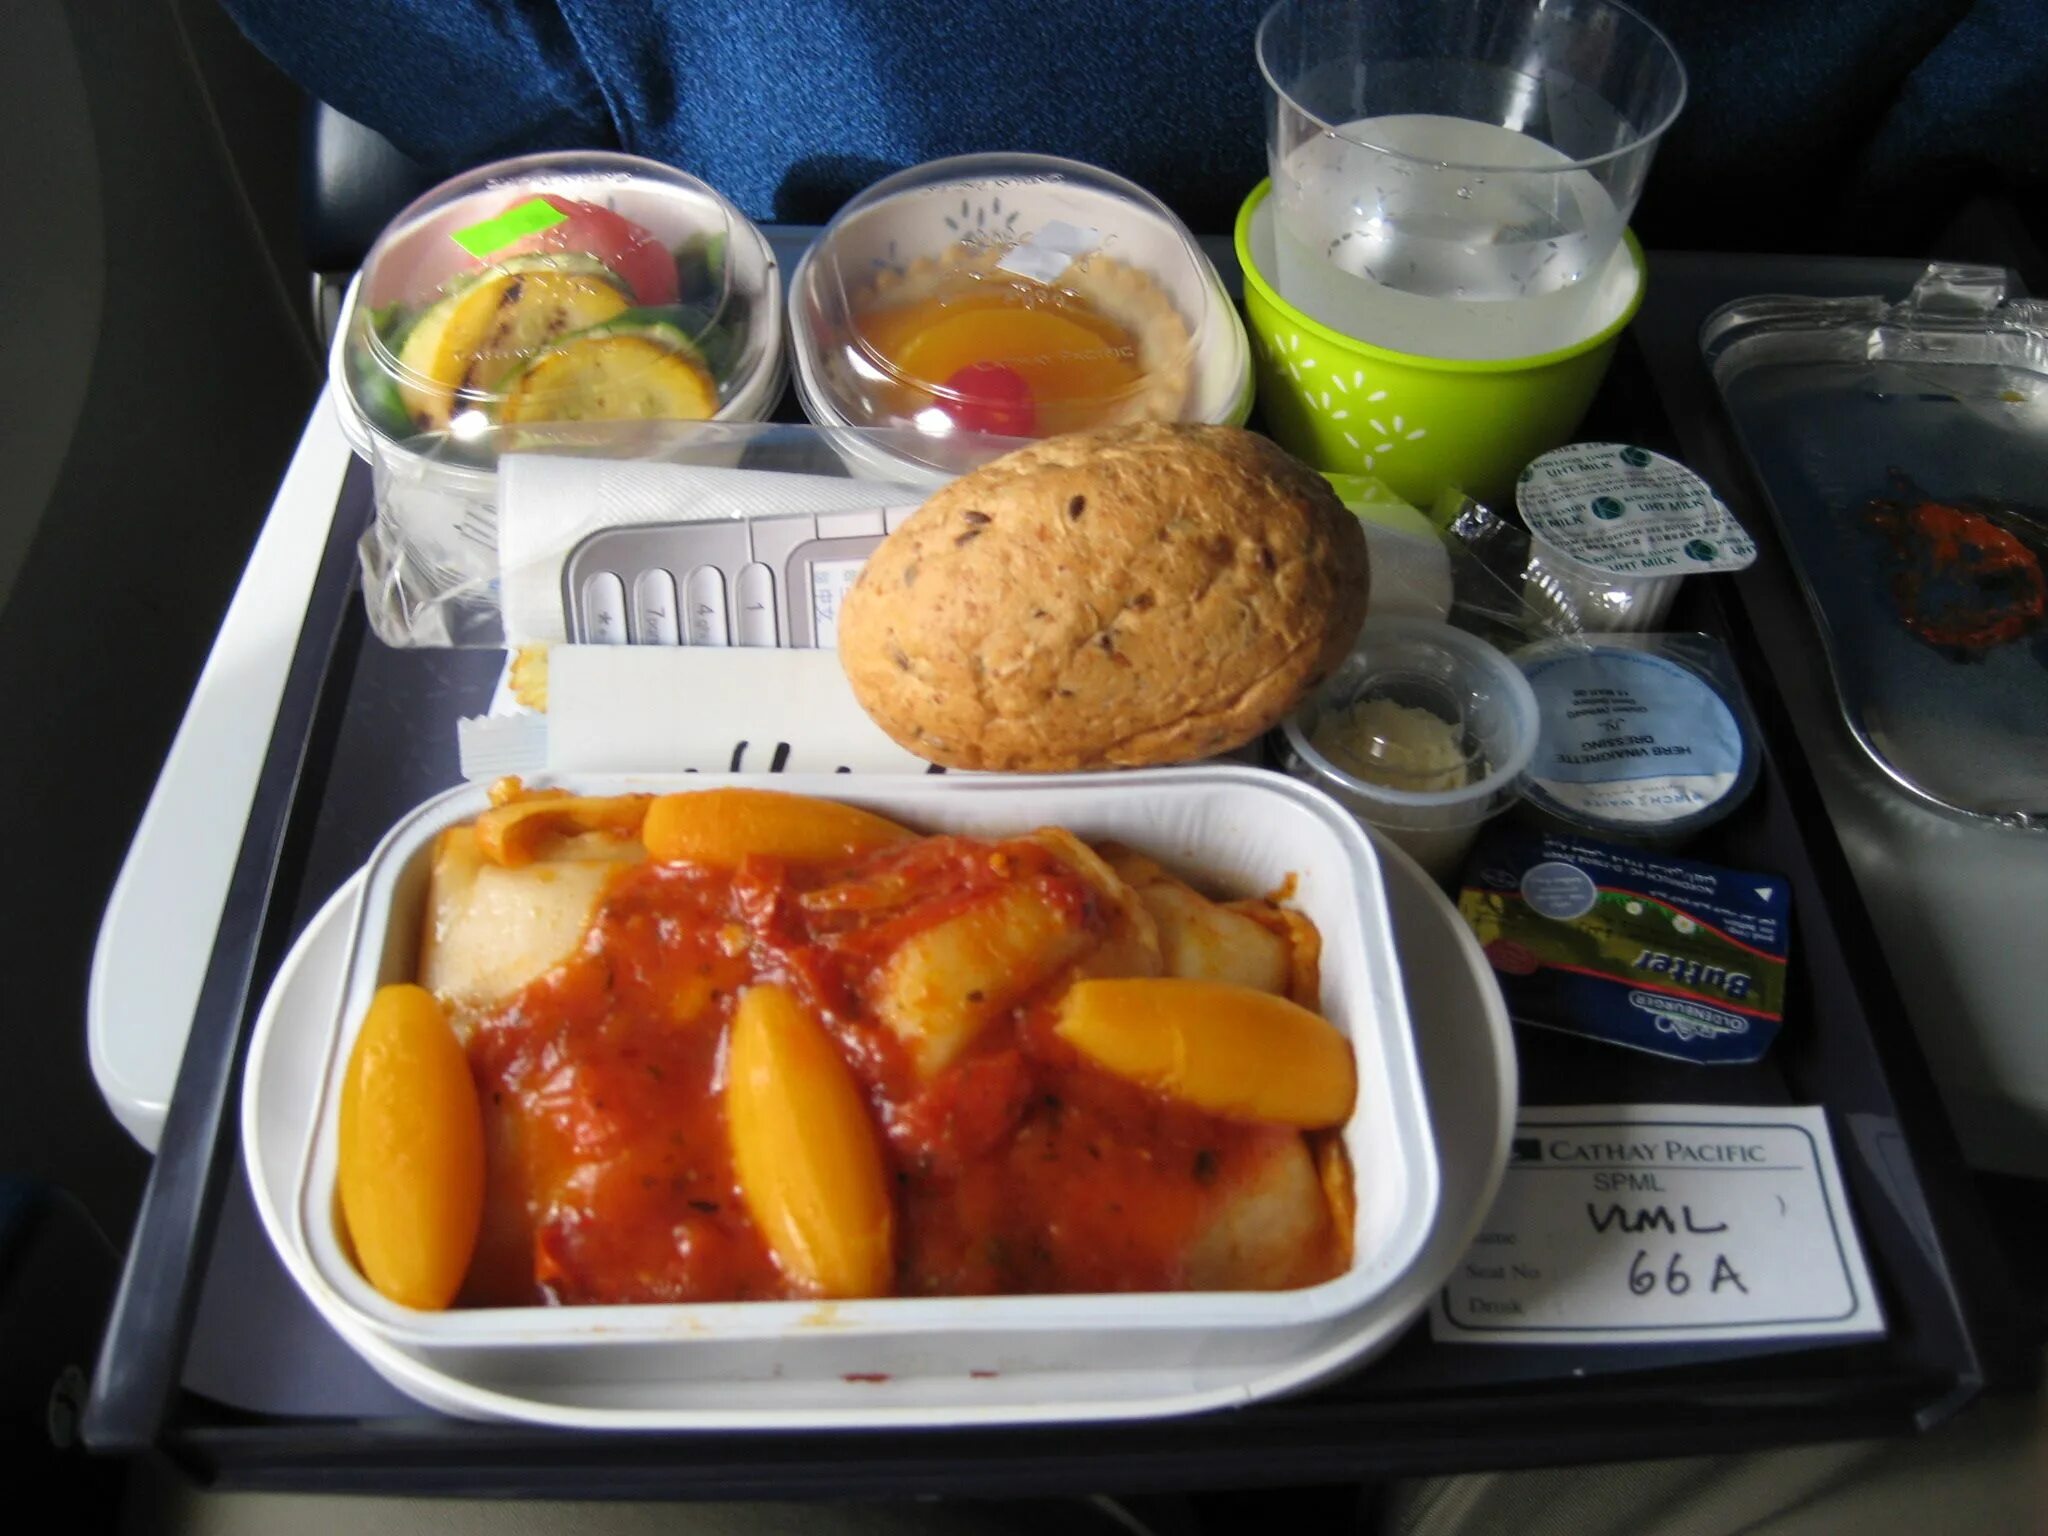 Еда в самолете. Обед в самолете. Вегетарианское питание в самолете. Завтрак в самолете. Разогрел обед